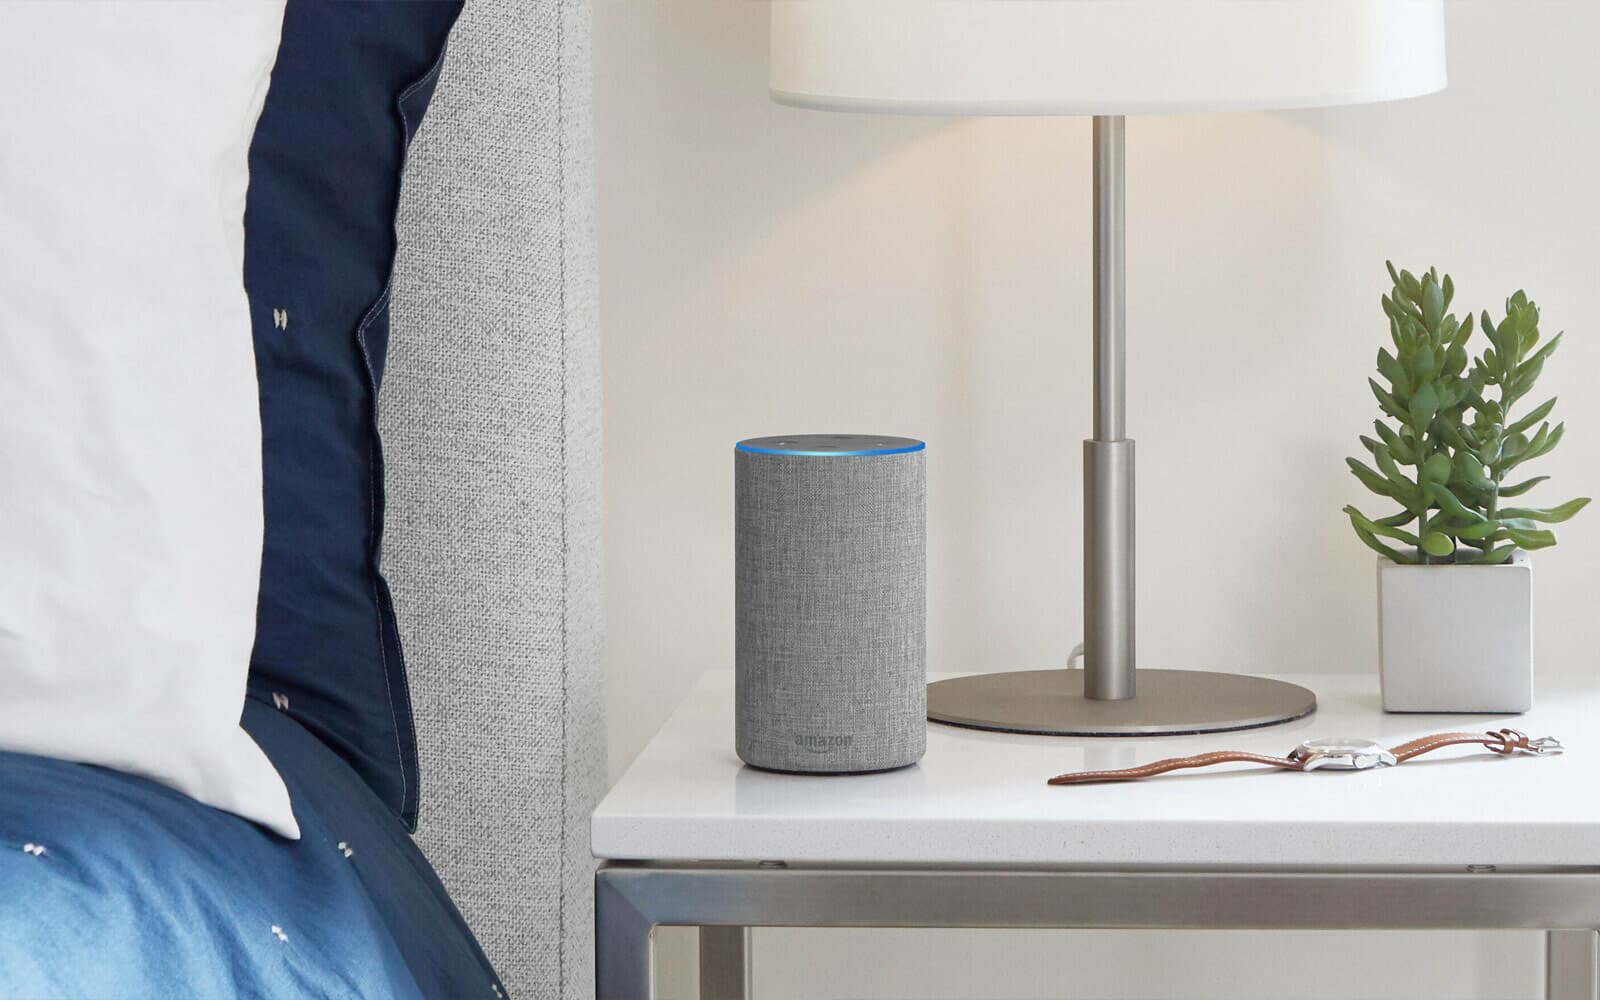 Alexa smart speaker on a night stand